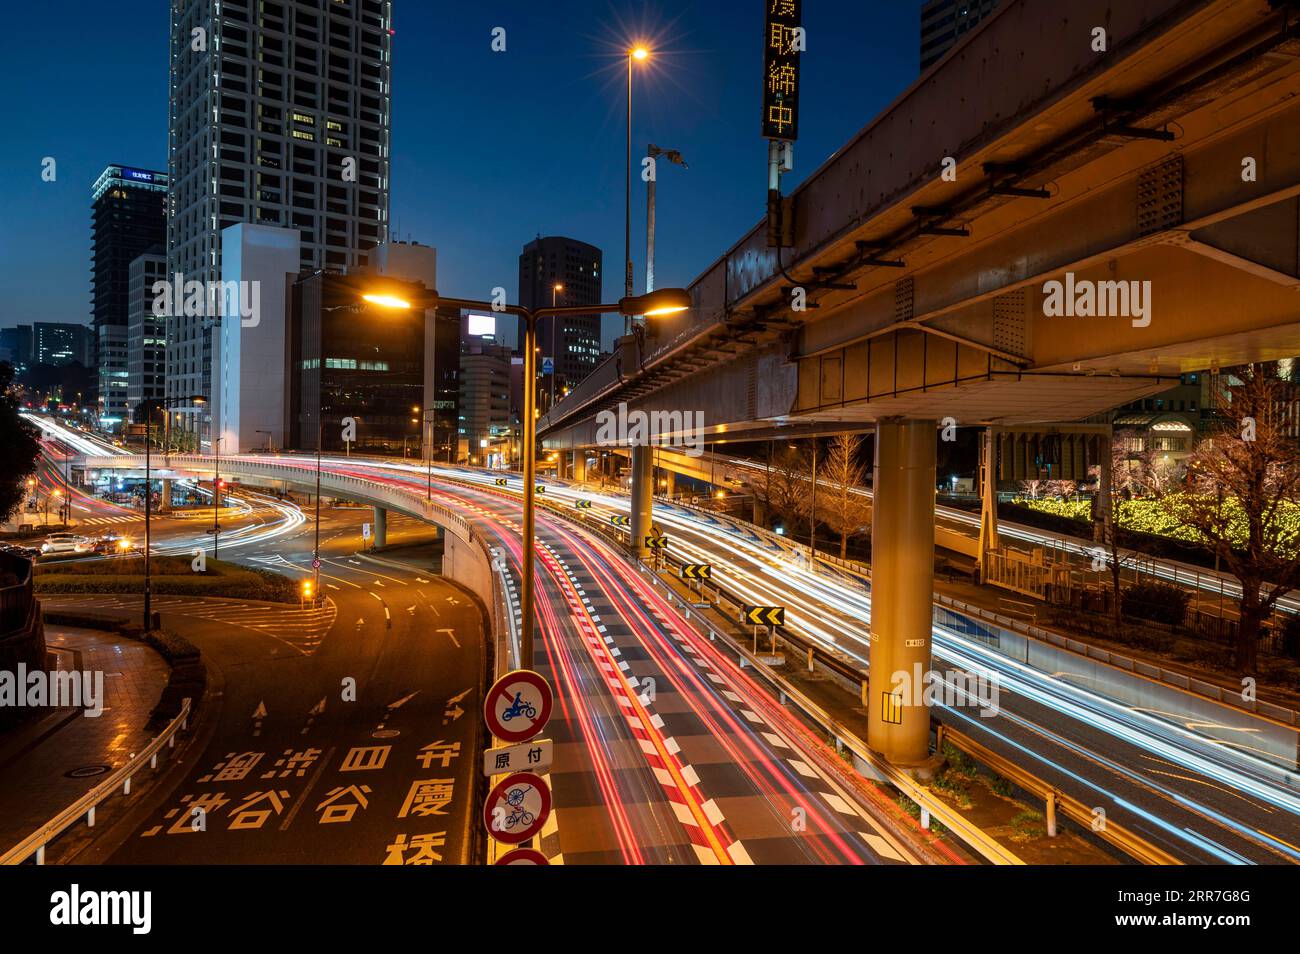 Japan night time urban landscape Stock Photo